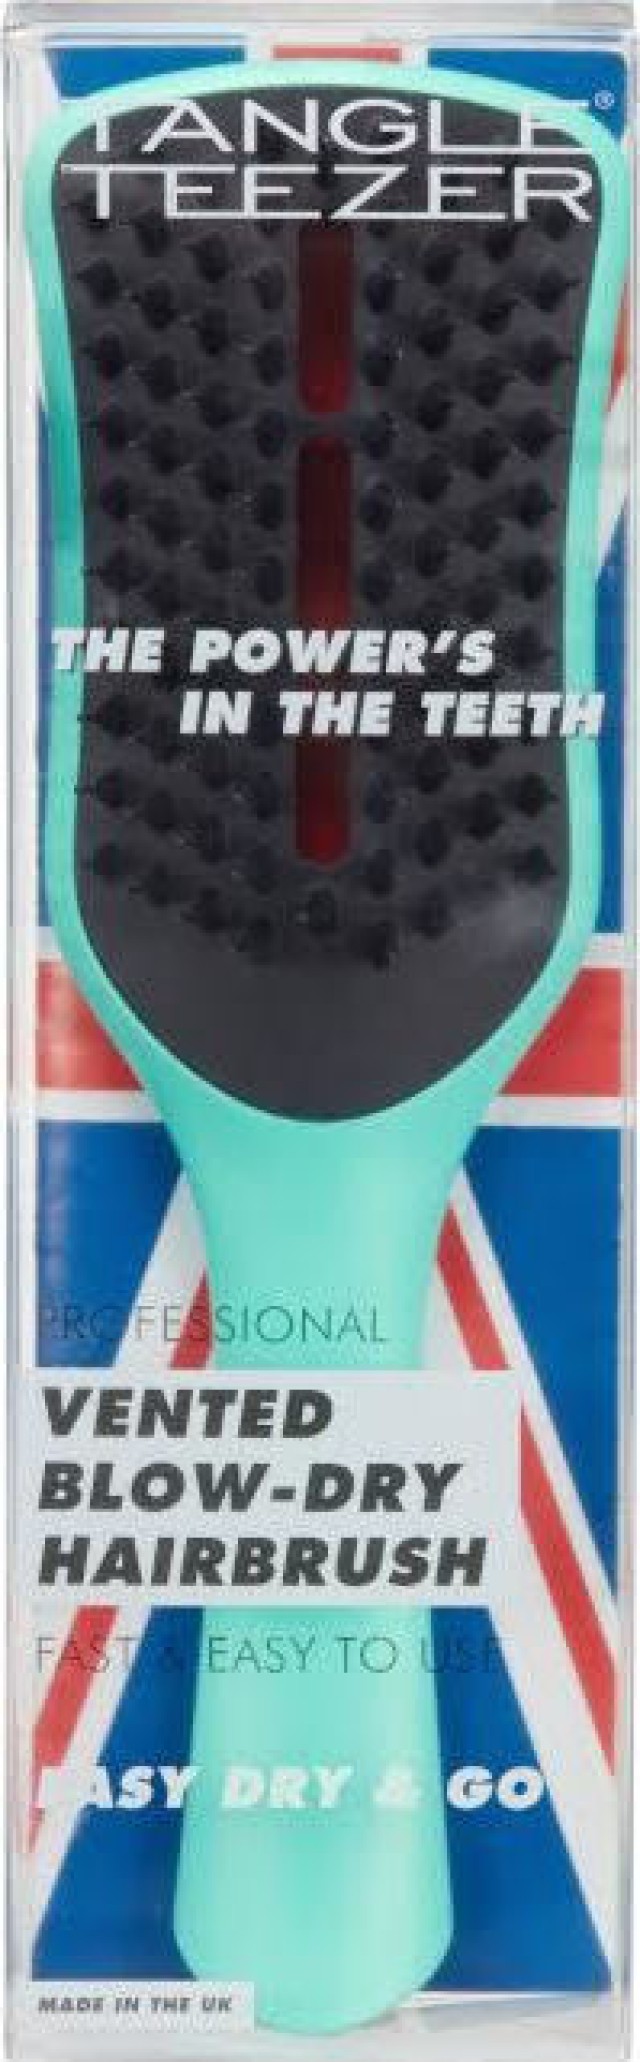 Tangle Teezer Vented Blow-Dry Hairbrush Easy Dry & Go Mint Βούρτσα Μαλλιών Για Εύκολο Στέγνωμα 1τμχ